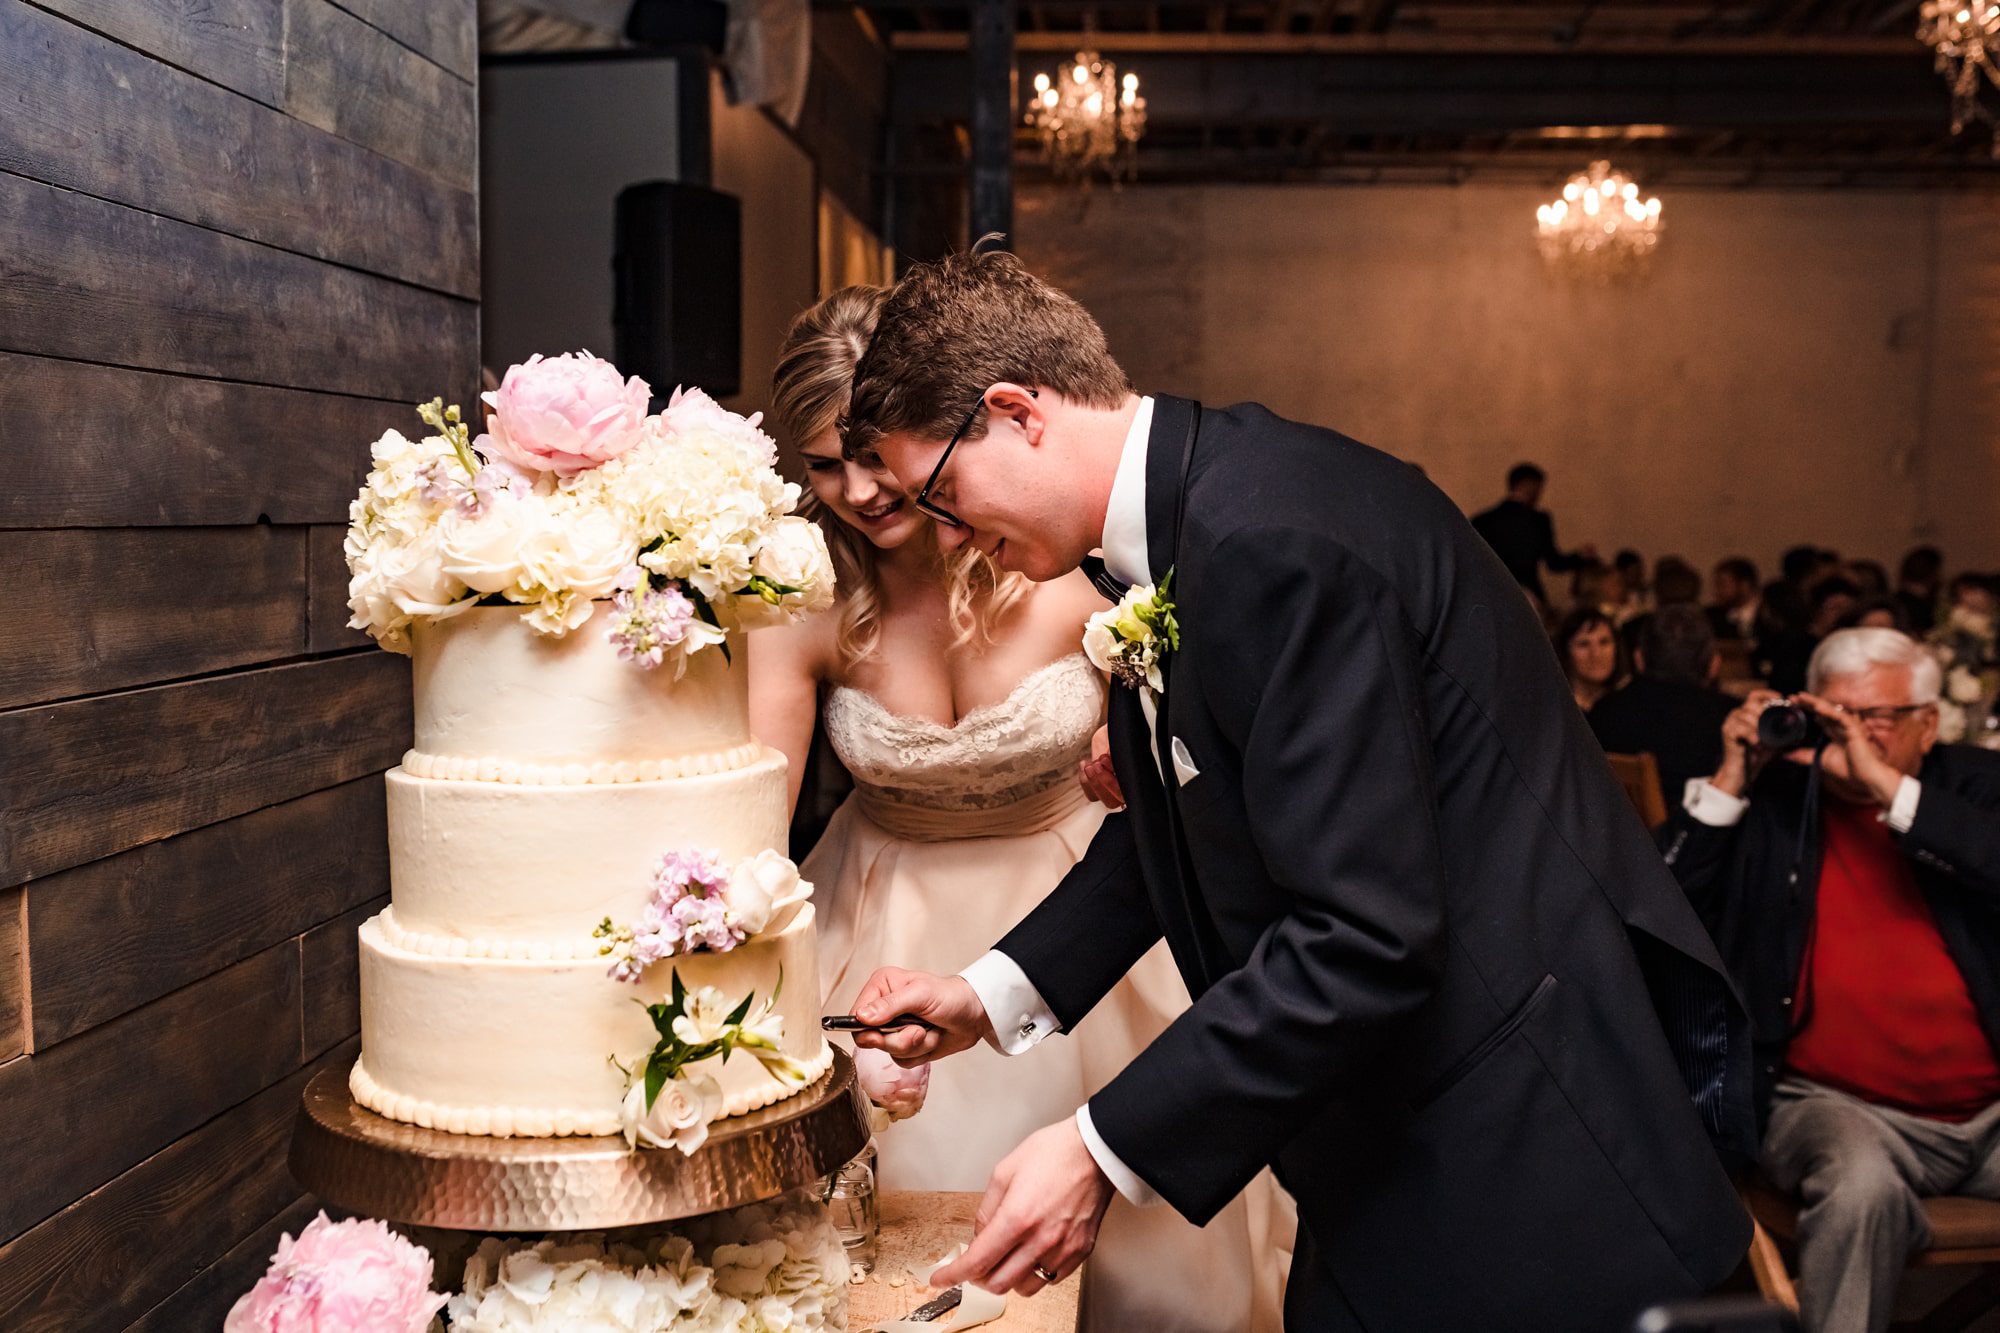 three tiered wedding cake, elegant wedding cake, wedding cake with flowers, simple wedding cake, white wedding cake with flowers, white and pink wedding cake, bride and groom cutting cake